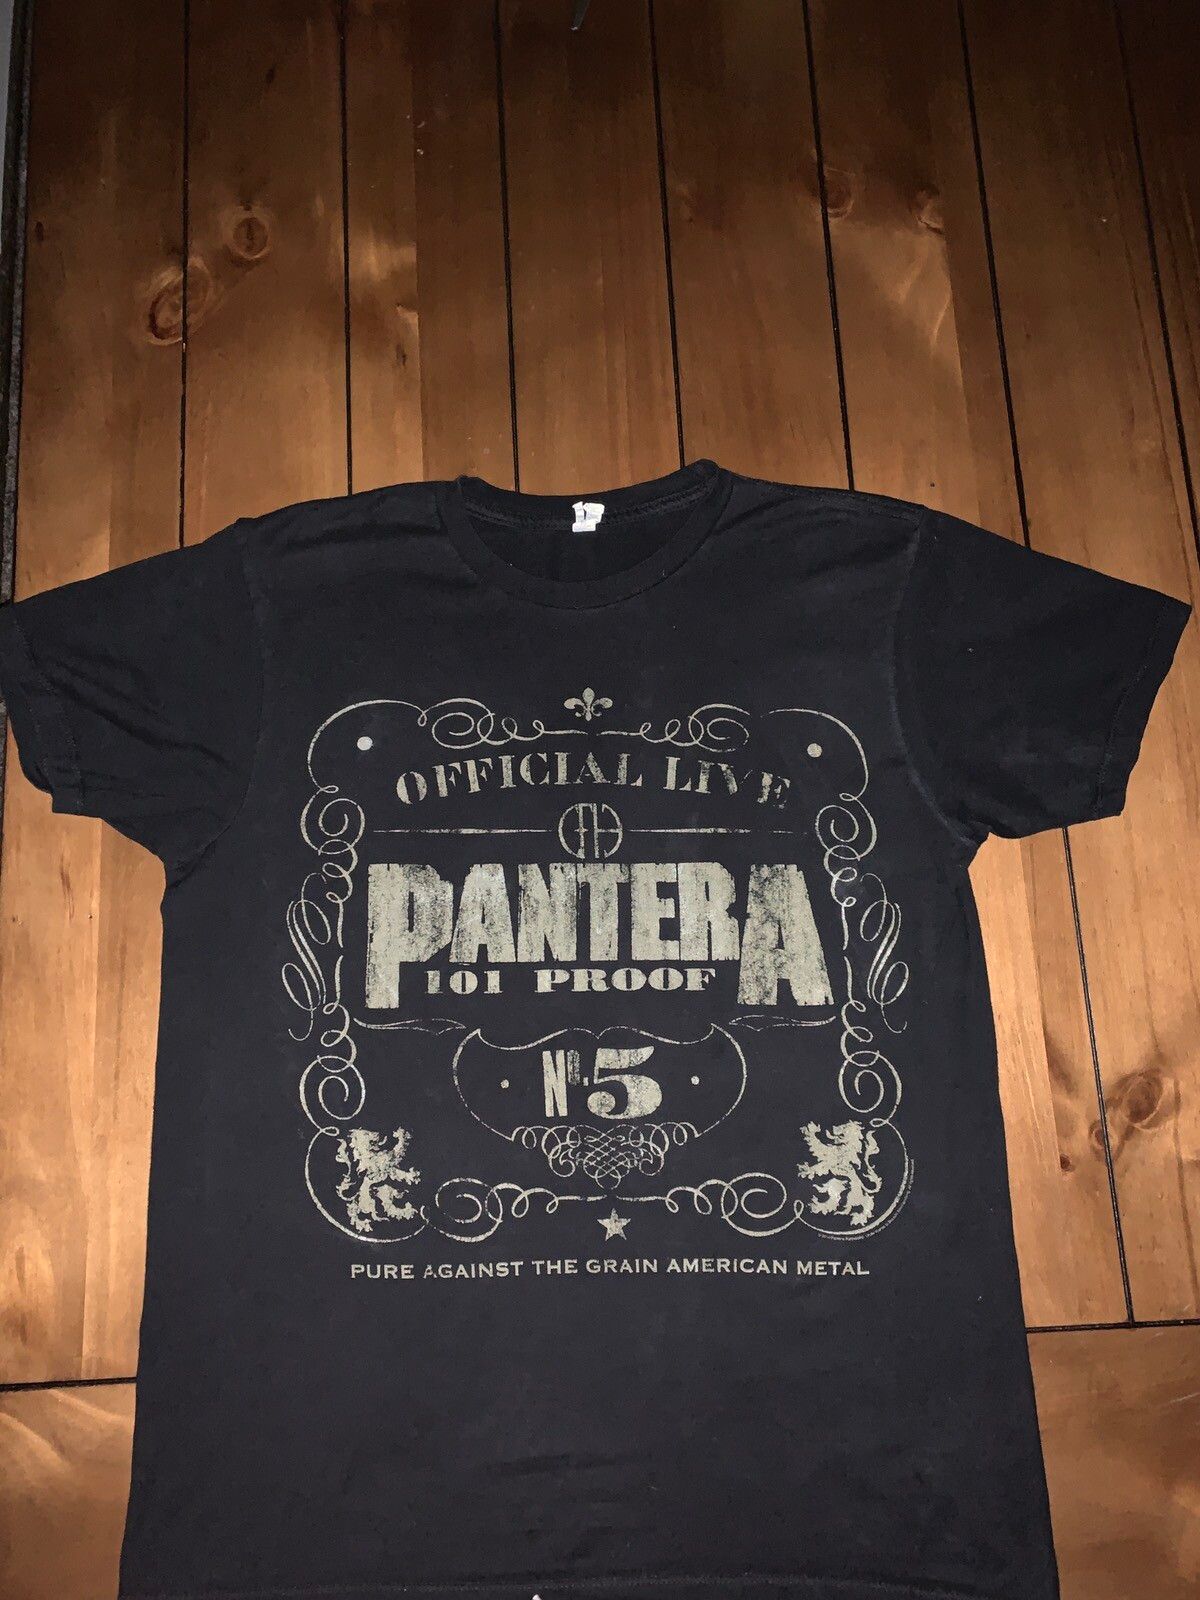 Alternative Pantera 101 Proof Official Live 1997 Vintage Band T shirt Size US M / EU 48-50 / 2 - 1 Preview